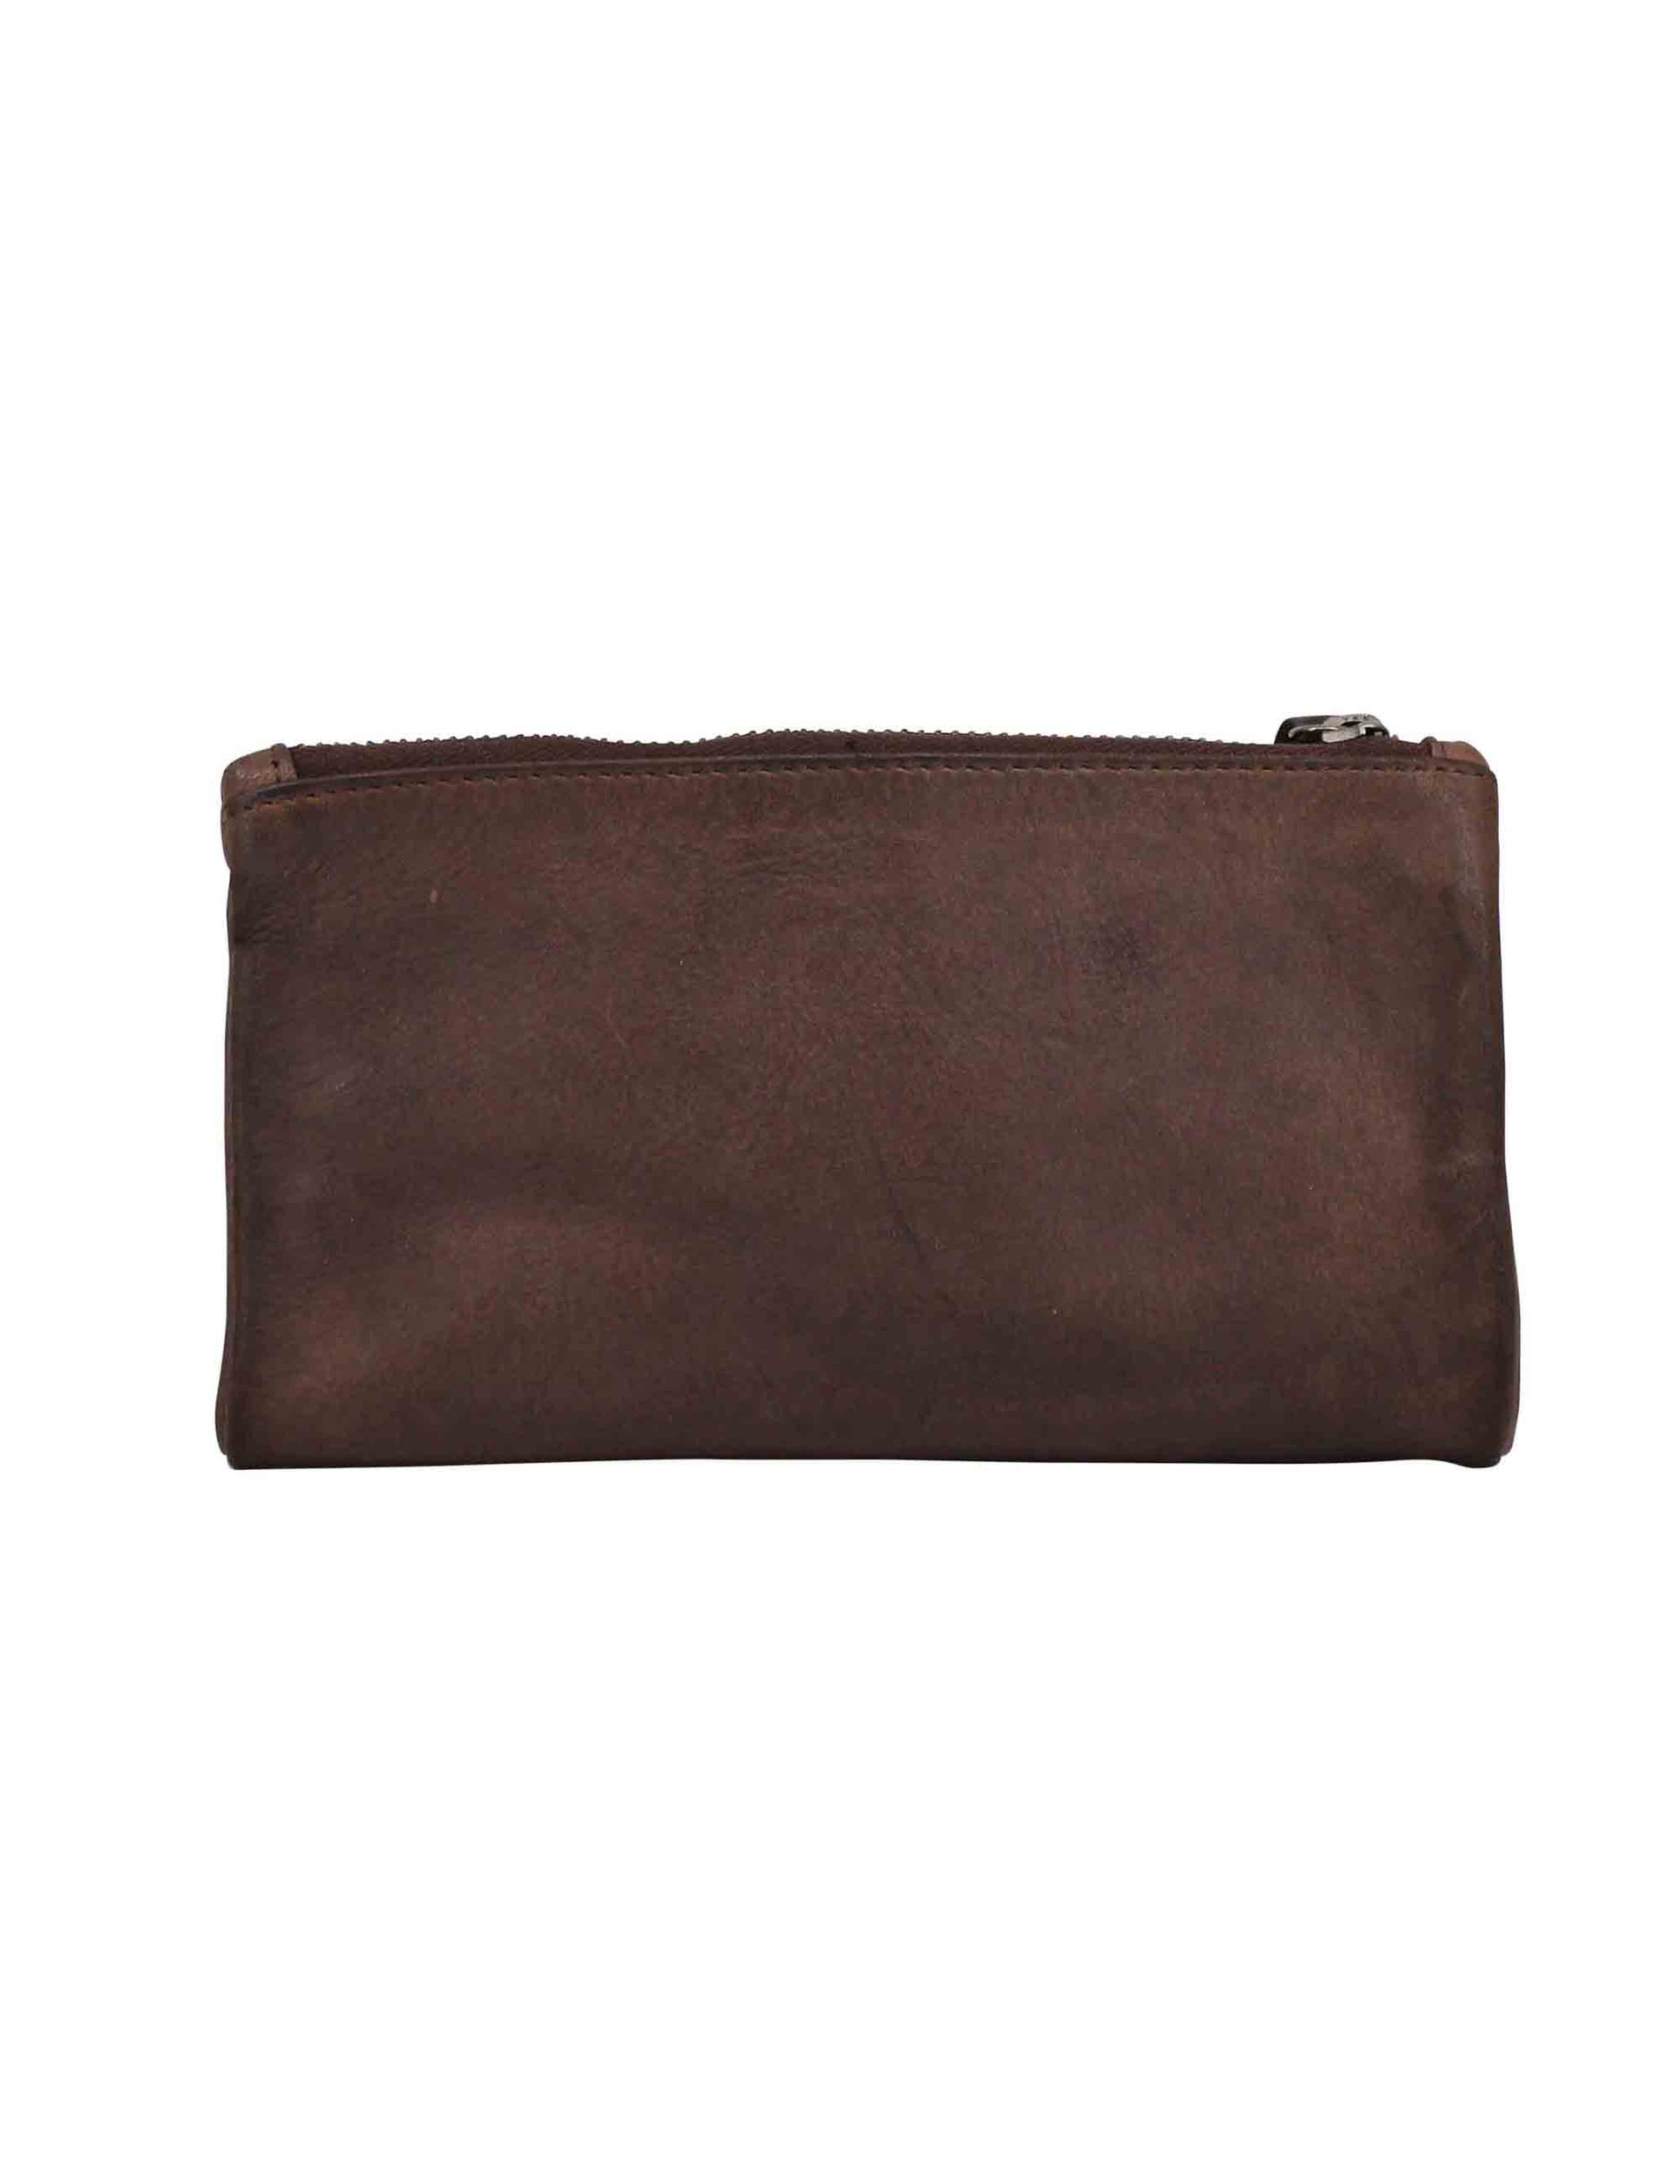 Men's document holder in vintage dark brown leather with zip closure